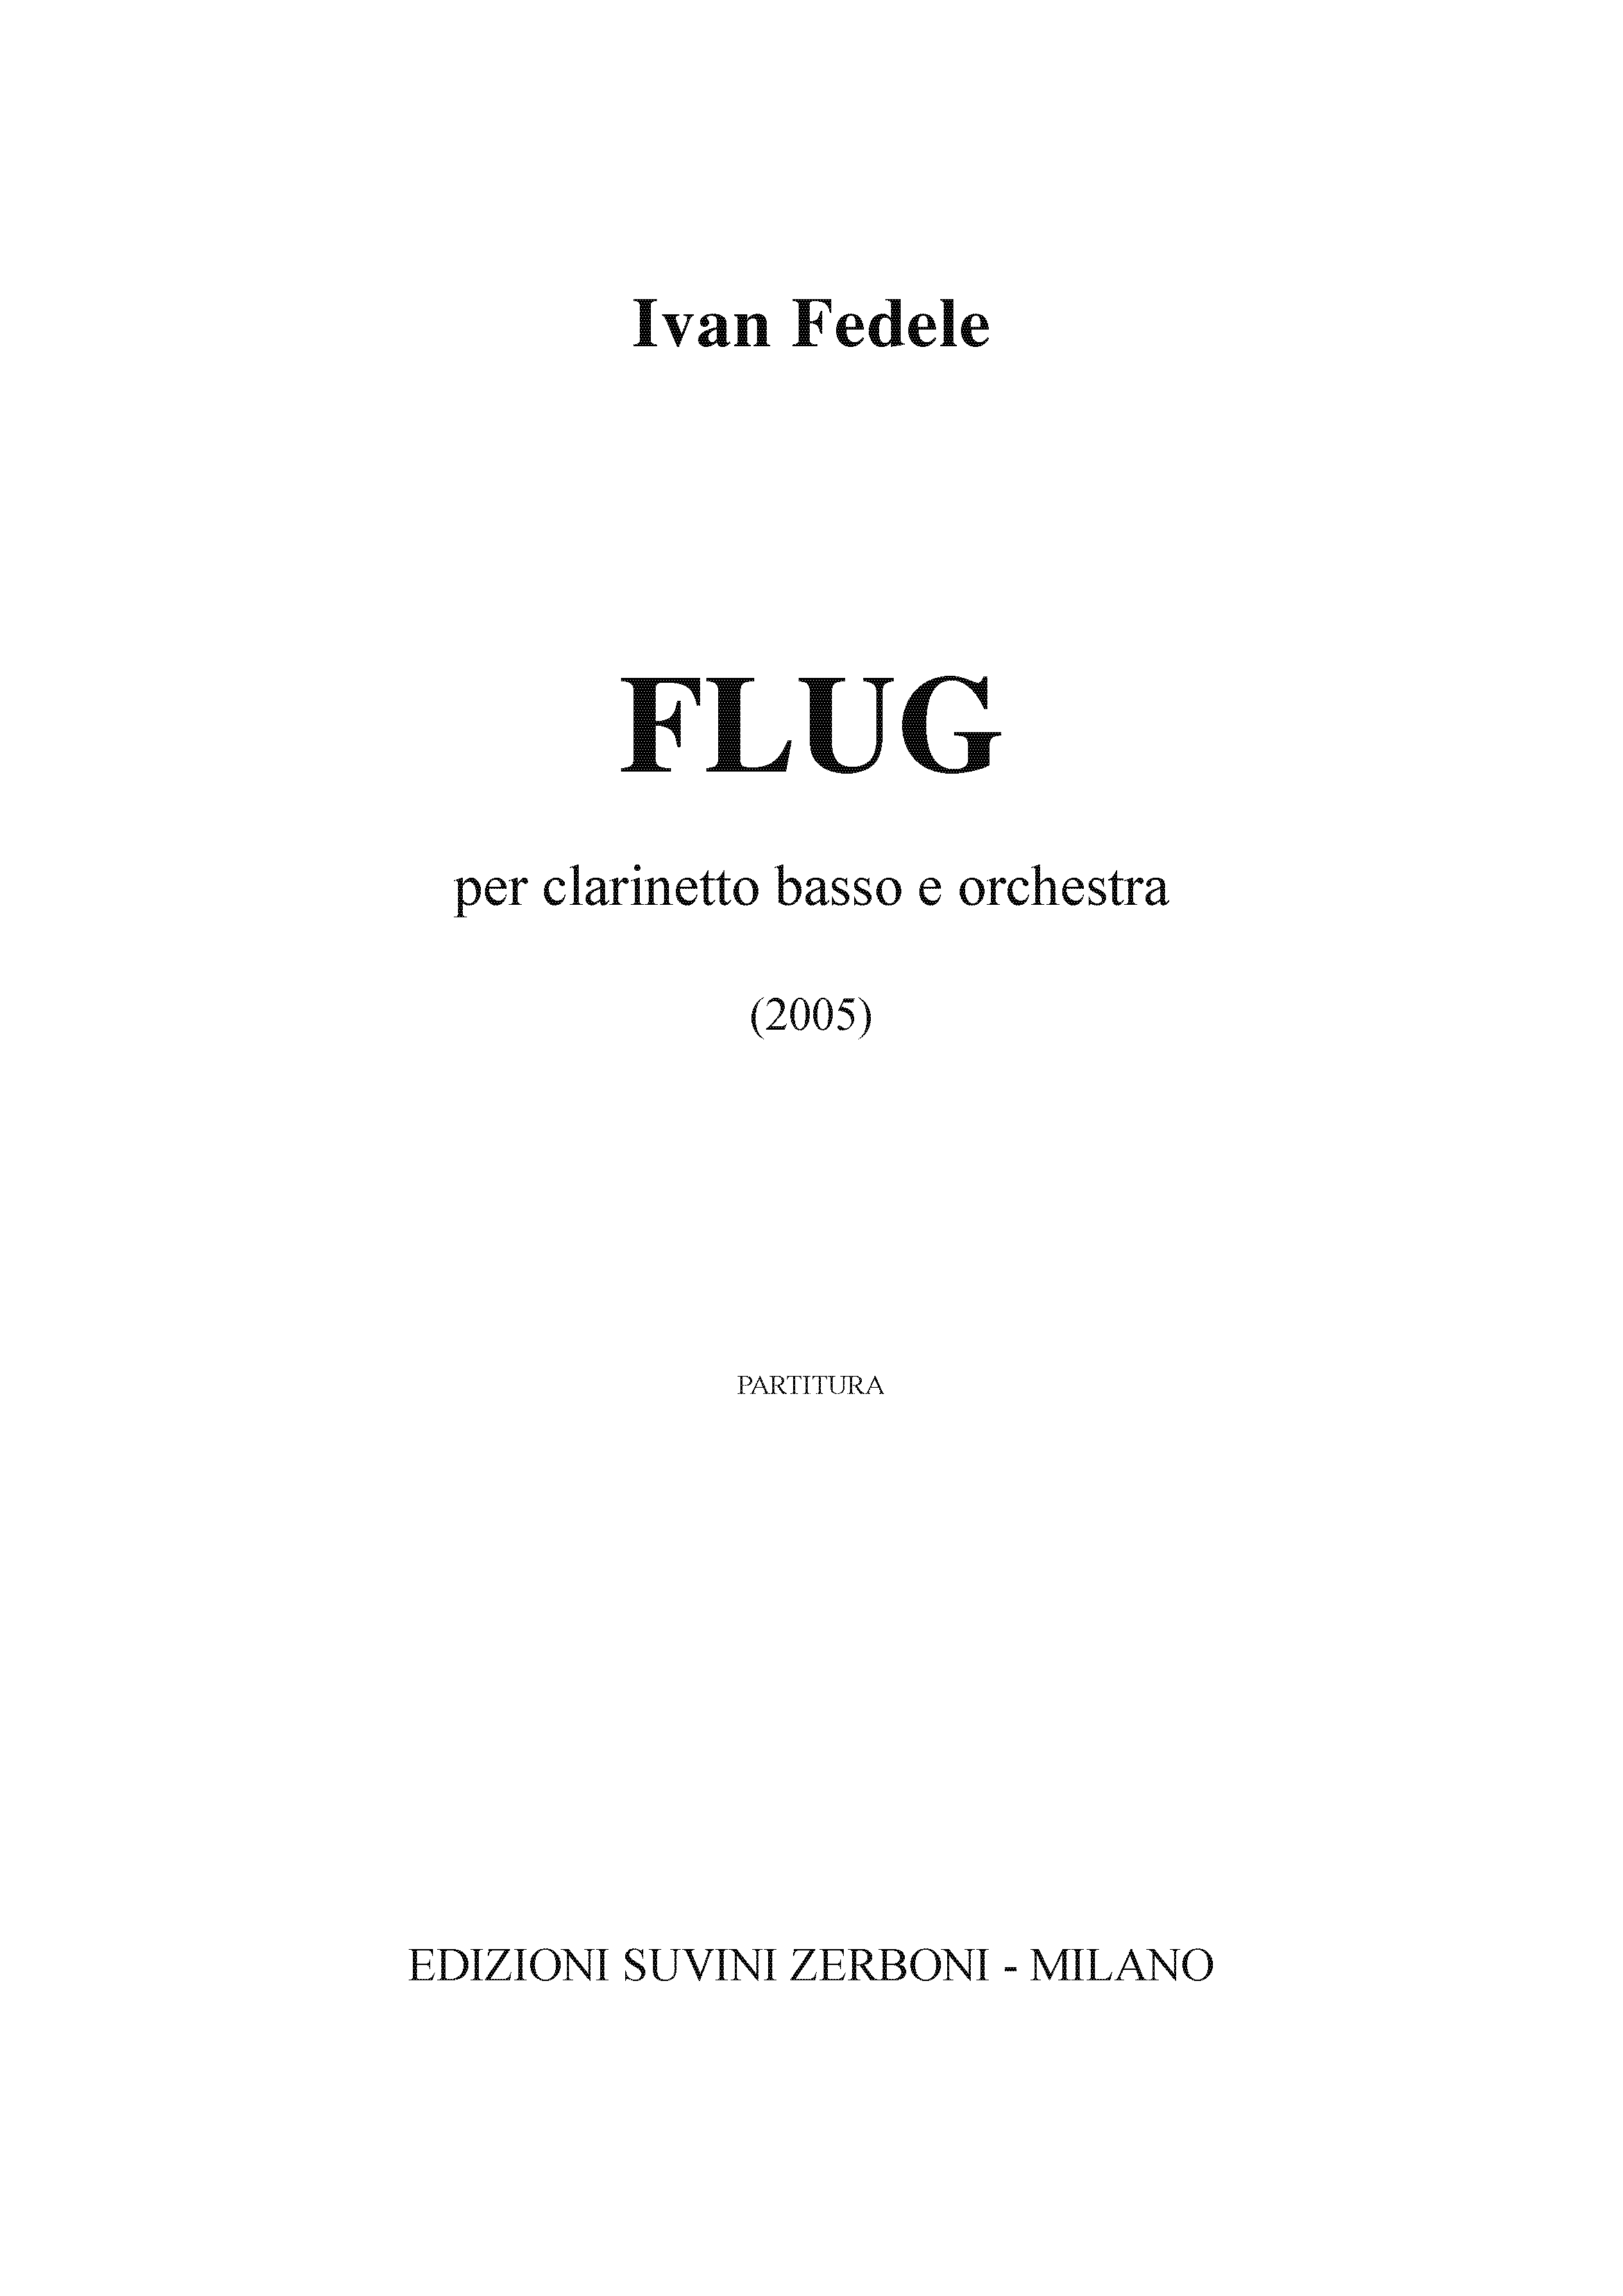 Flug_Fedele 1